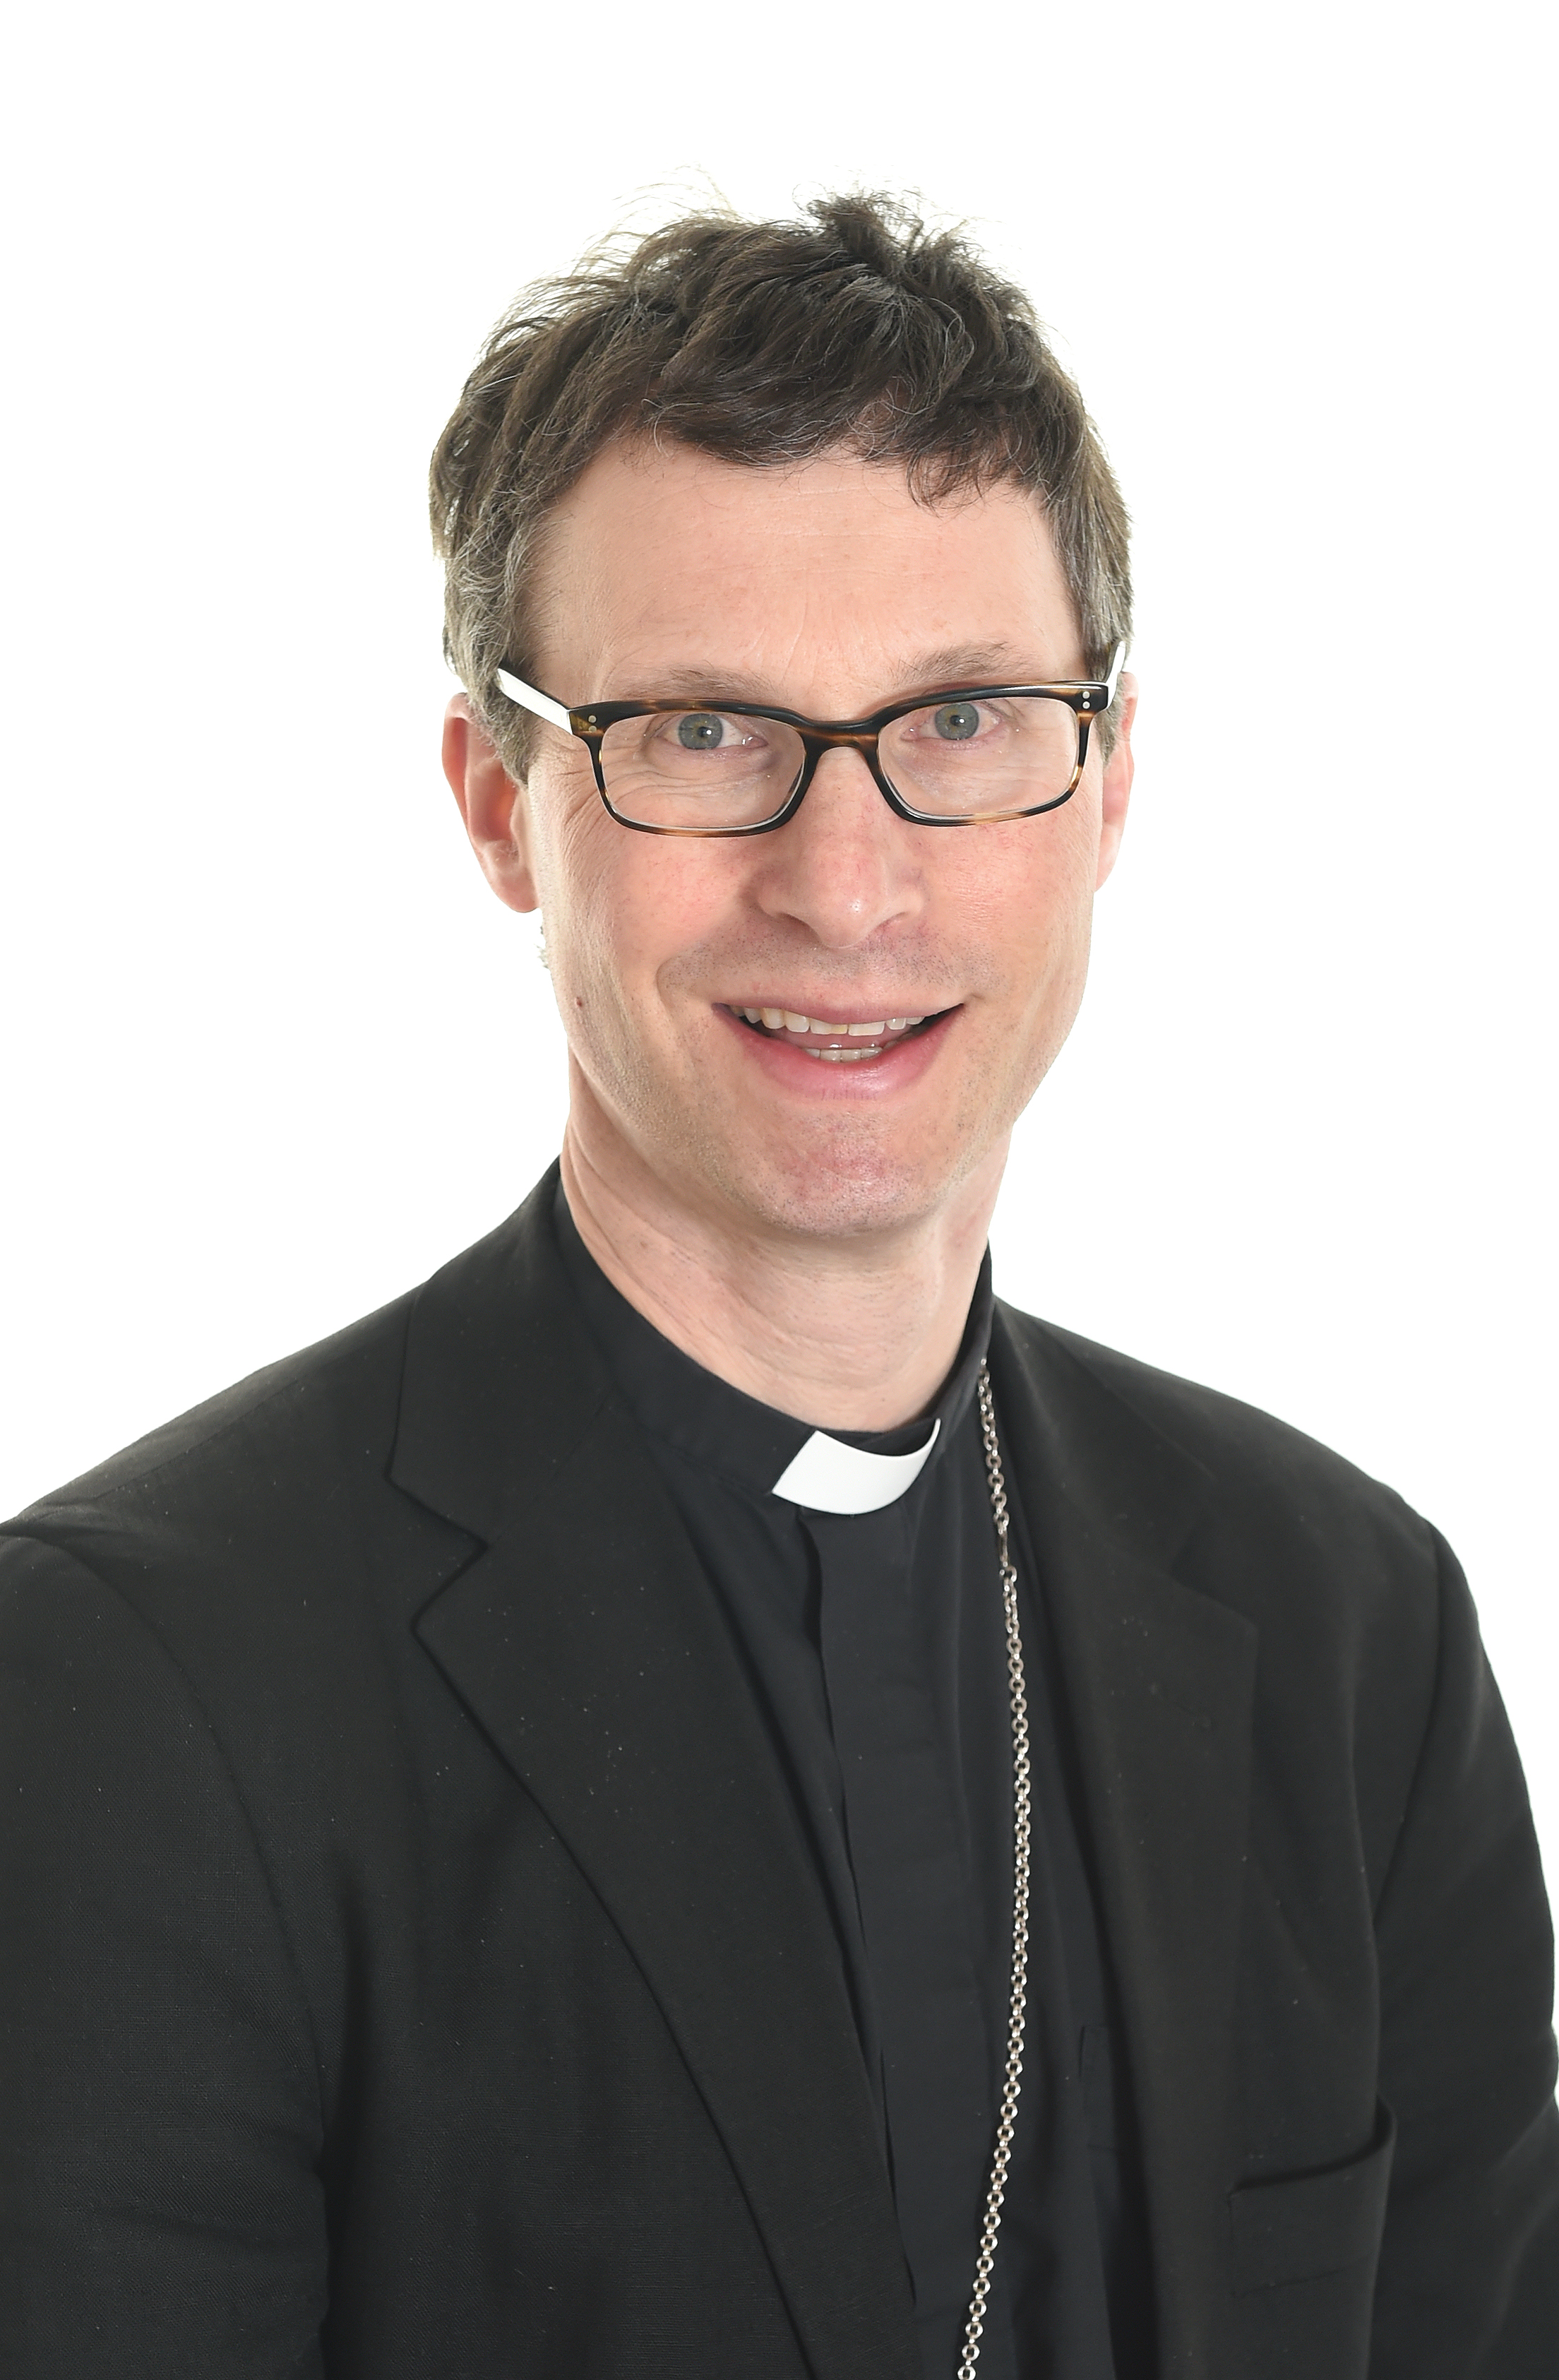 Bishop Philip North’s address to Synod